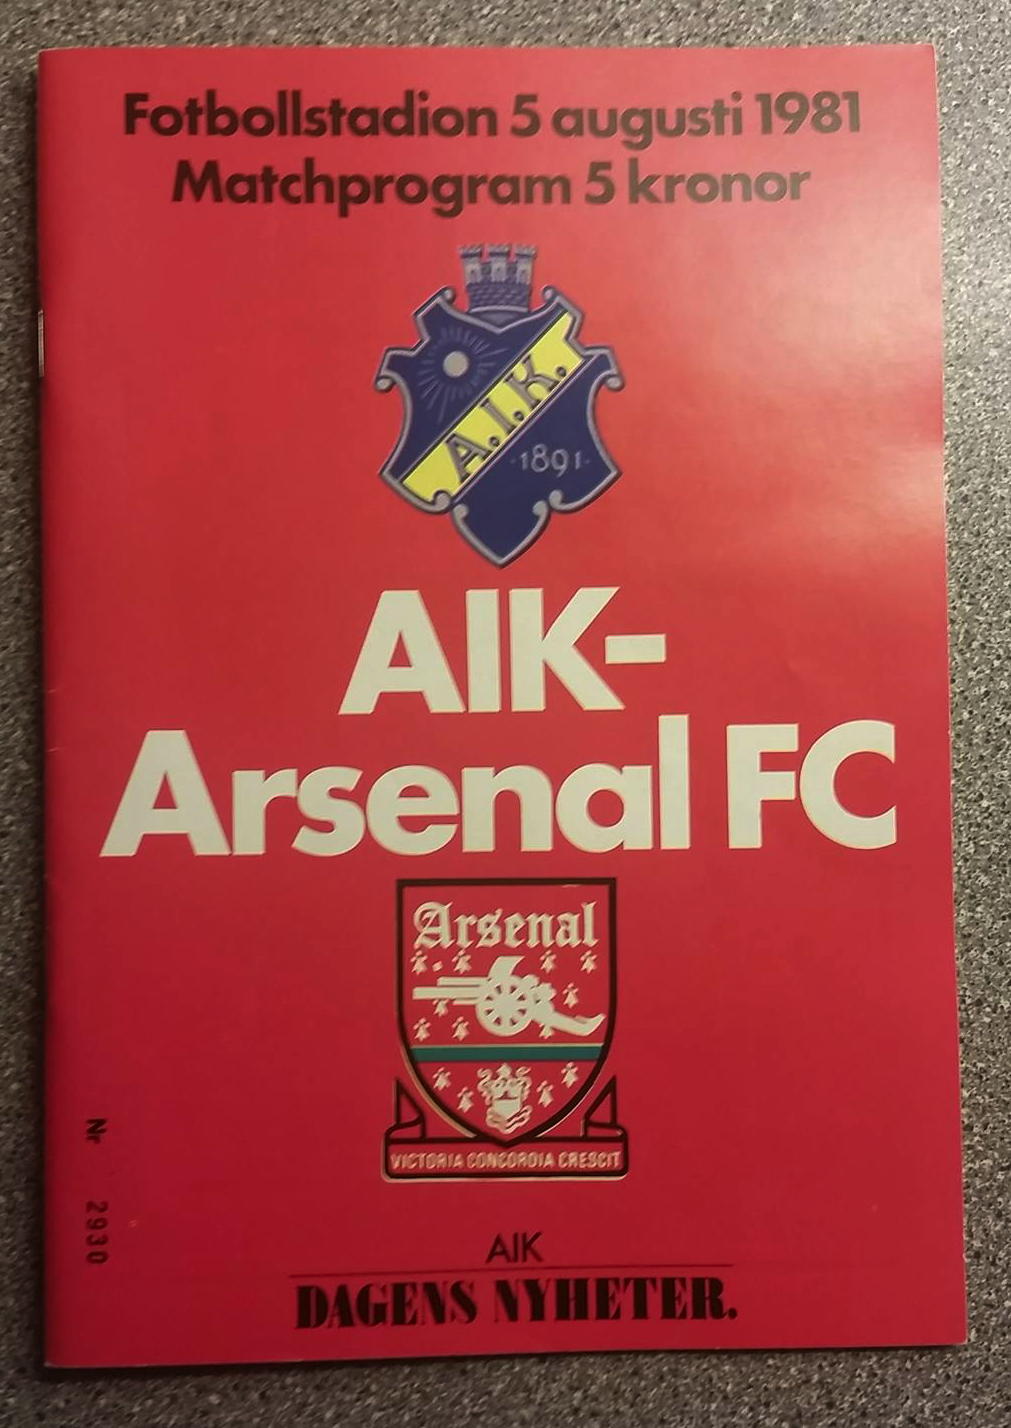 Wednesday 5 August 1981, kl 19:00  AIK - Arsenal FC 0-0 (0-0)  Råsunda Fotbollstadion, Solna